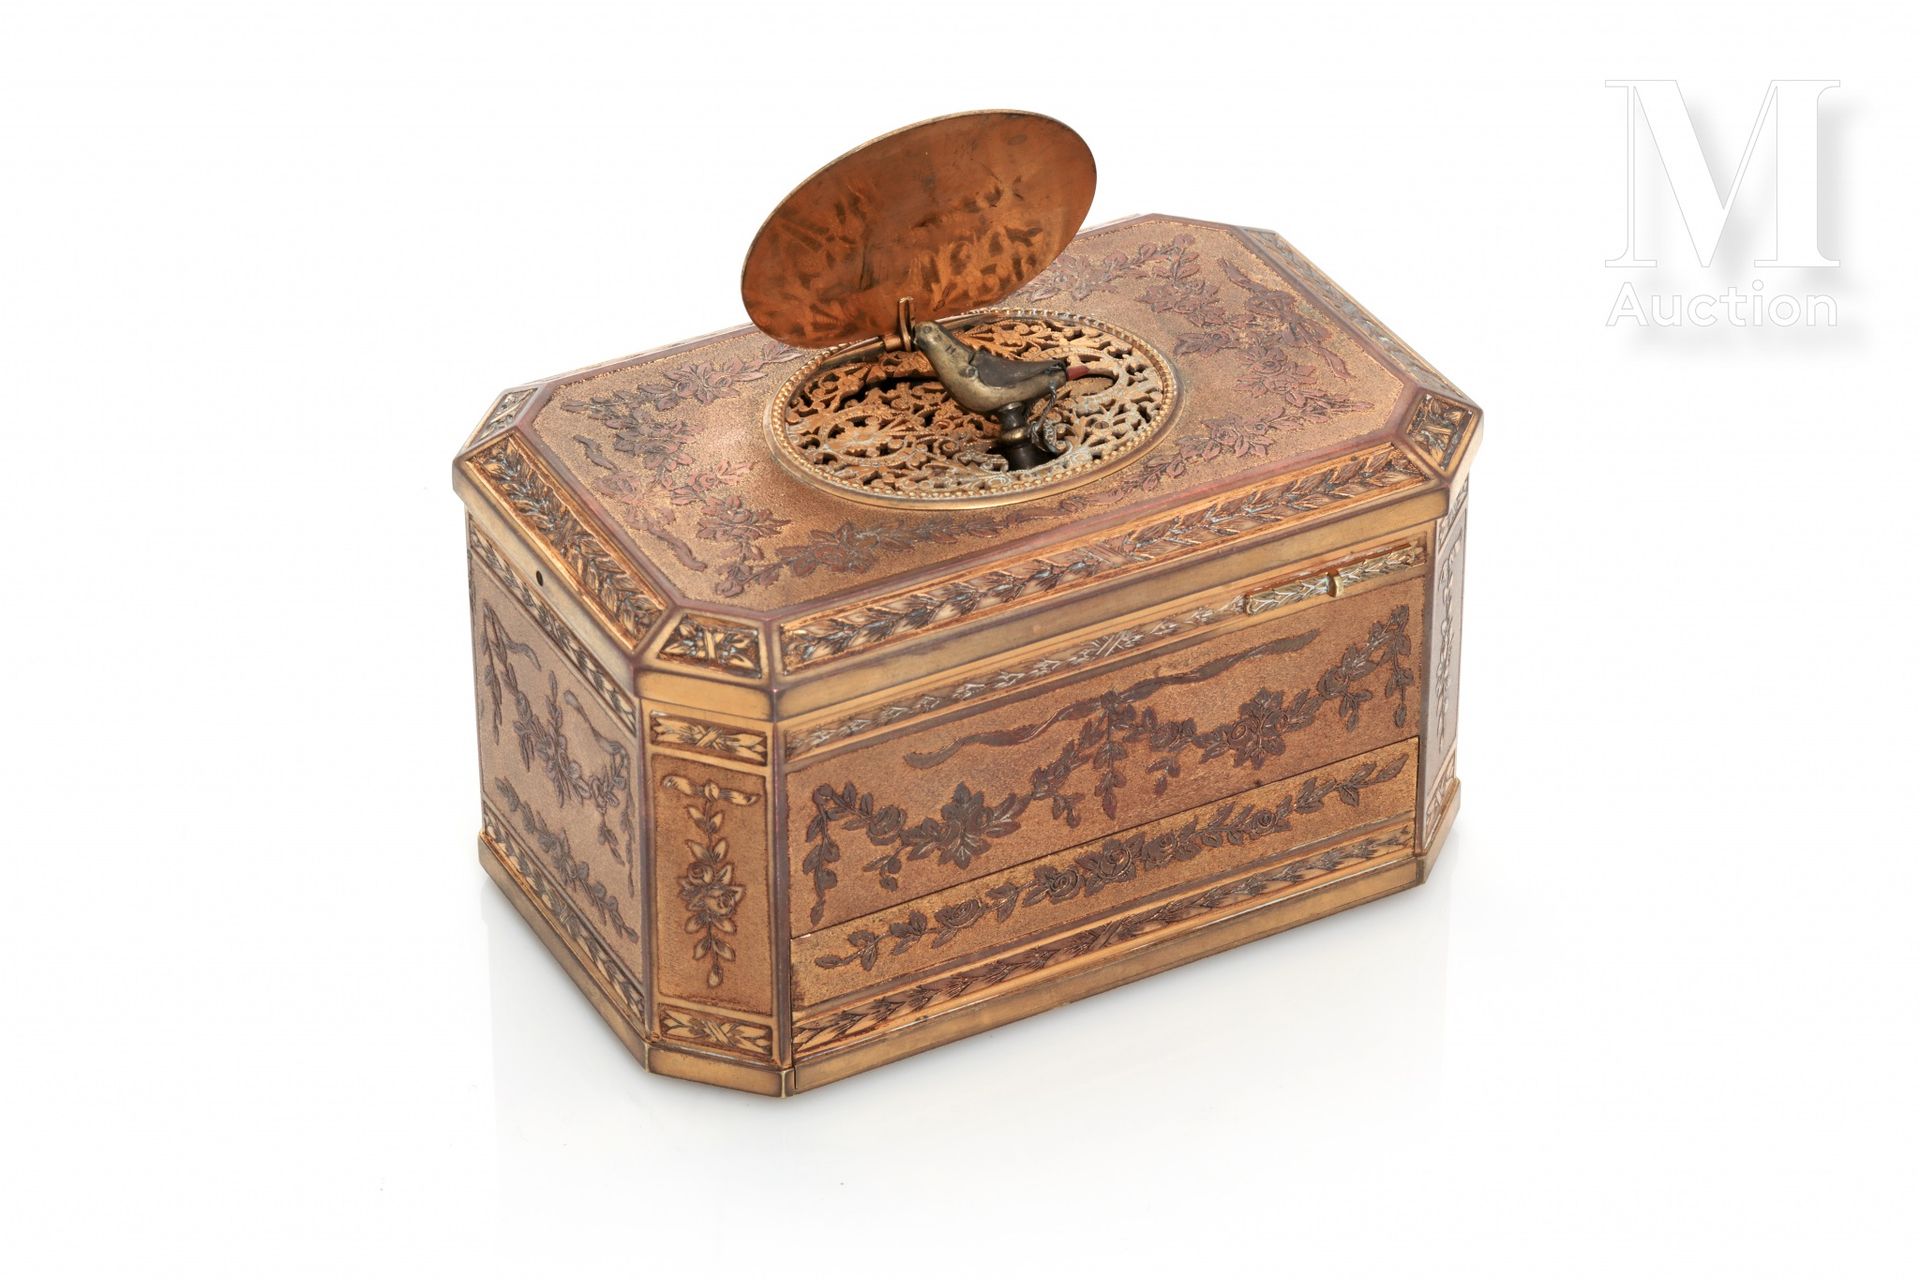 BREGUET 宝玑

唱歌的鸟的自动装置

带抽屉的香烟盒

约1940年

镂空黄铜表壳，署名宝玑。

路易十五风格的鲜花镀金装饰

手动上链机械机芯。

&hellip;